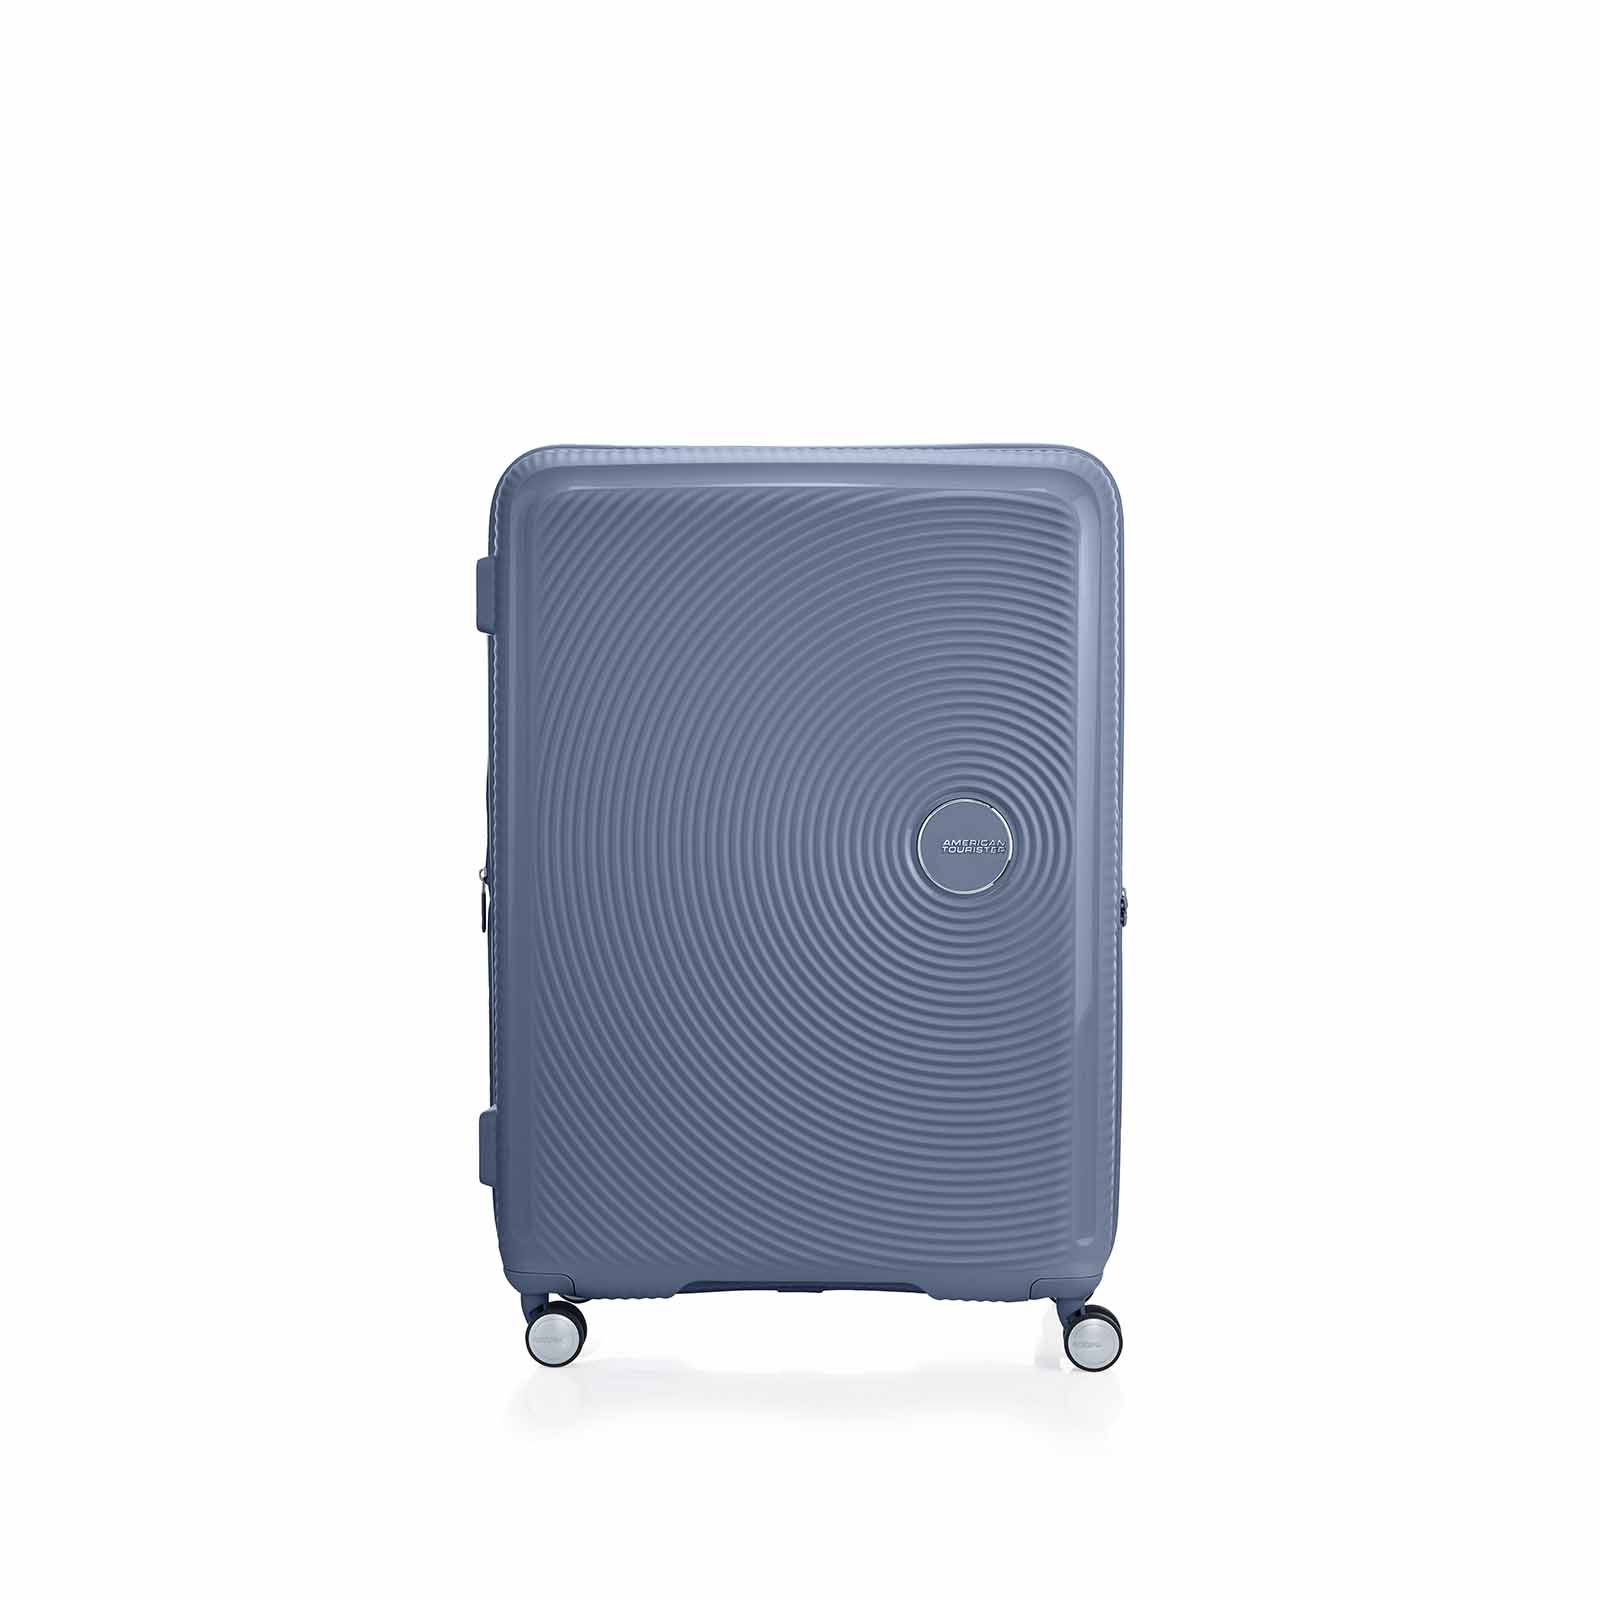 American-Tourister-Curio-2-80cm-Suitcase-Stone-Blue-Front